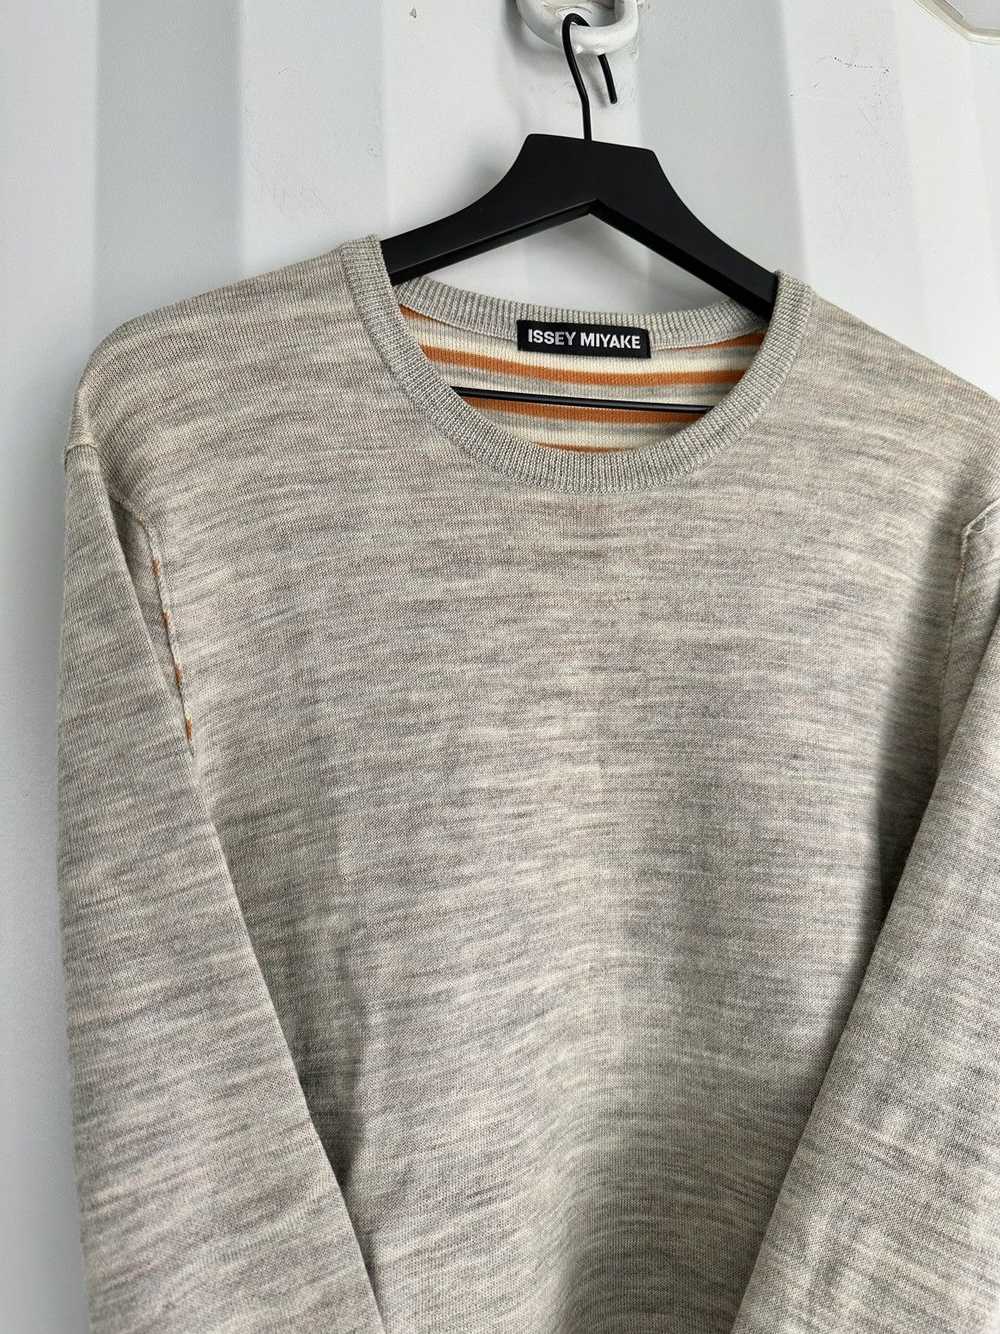 Issey Miyake Double Layered Sweater Shirt - image 3